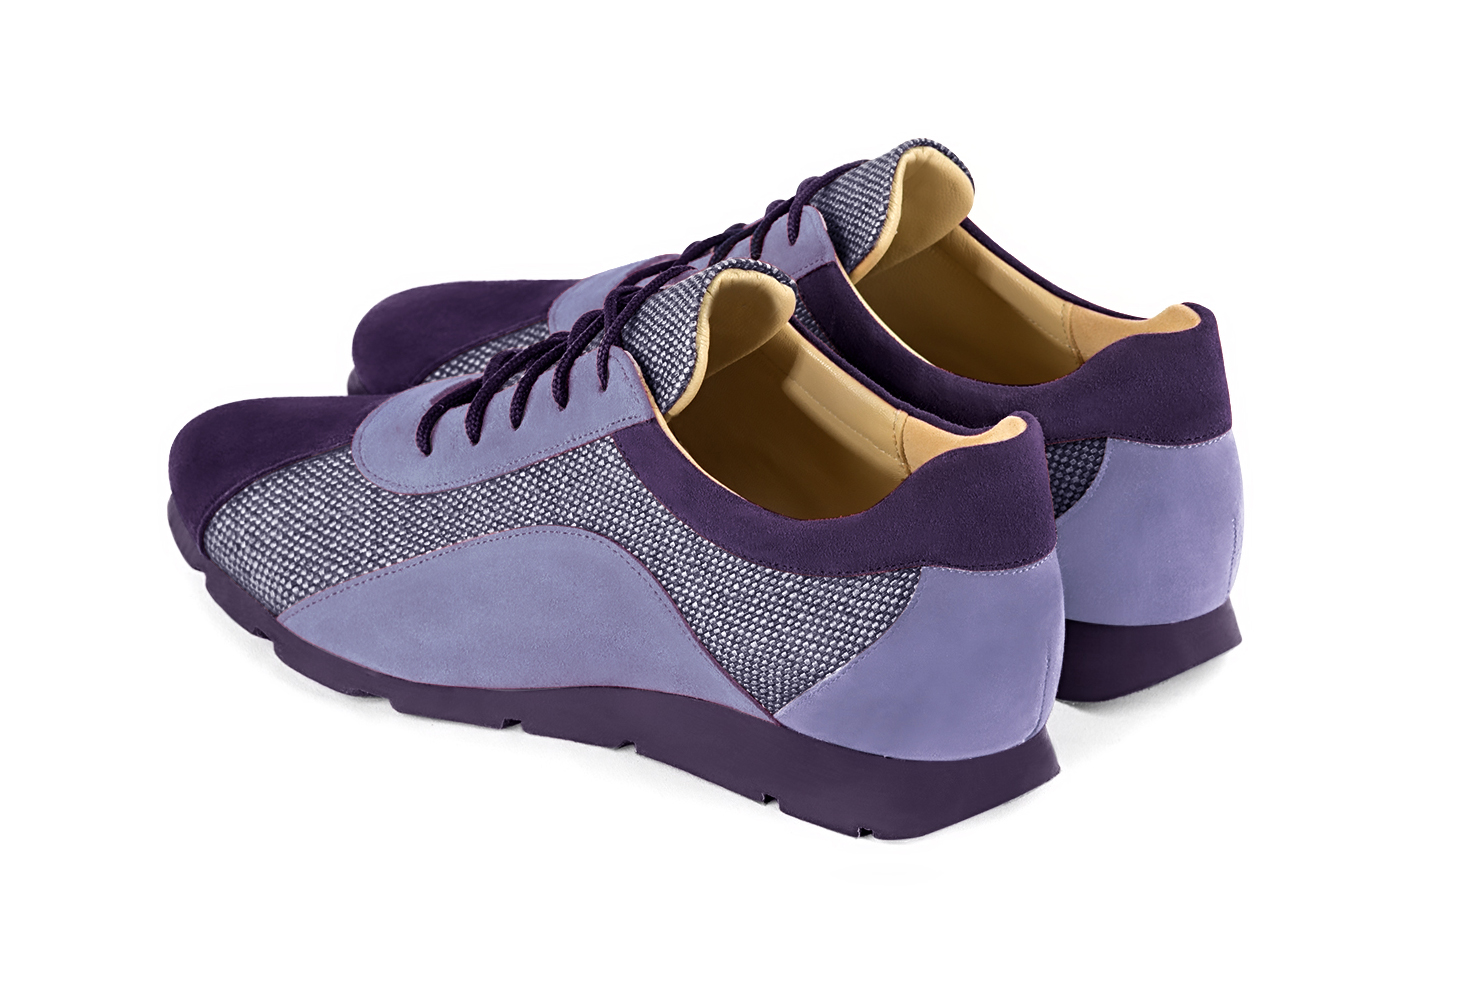 Lavender purple women's two-tone elegant sneakers. Round toe. Flat rubber soles. Rear view - Florence KOOIJMAN